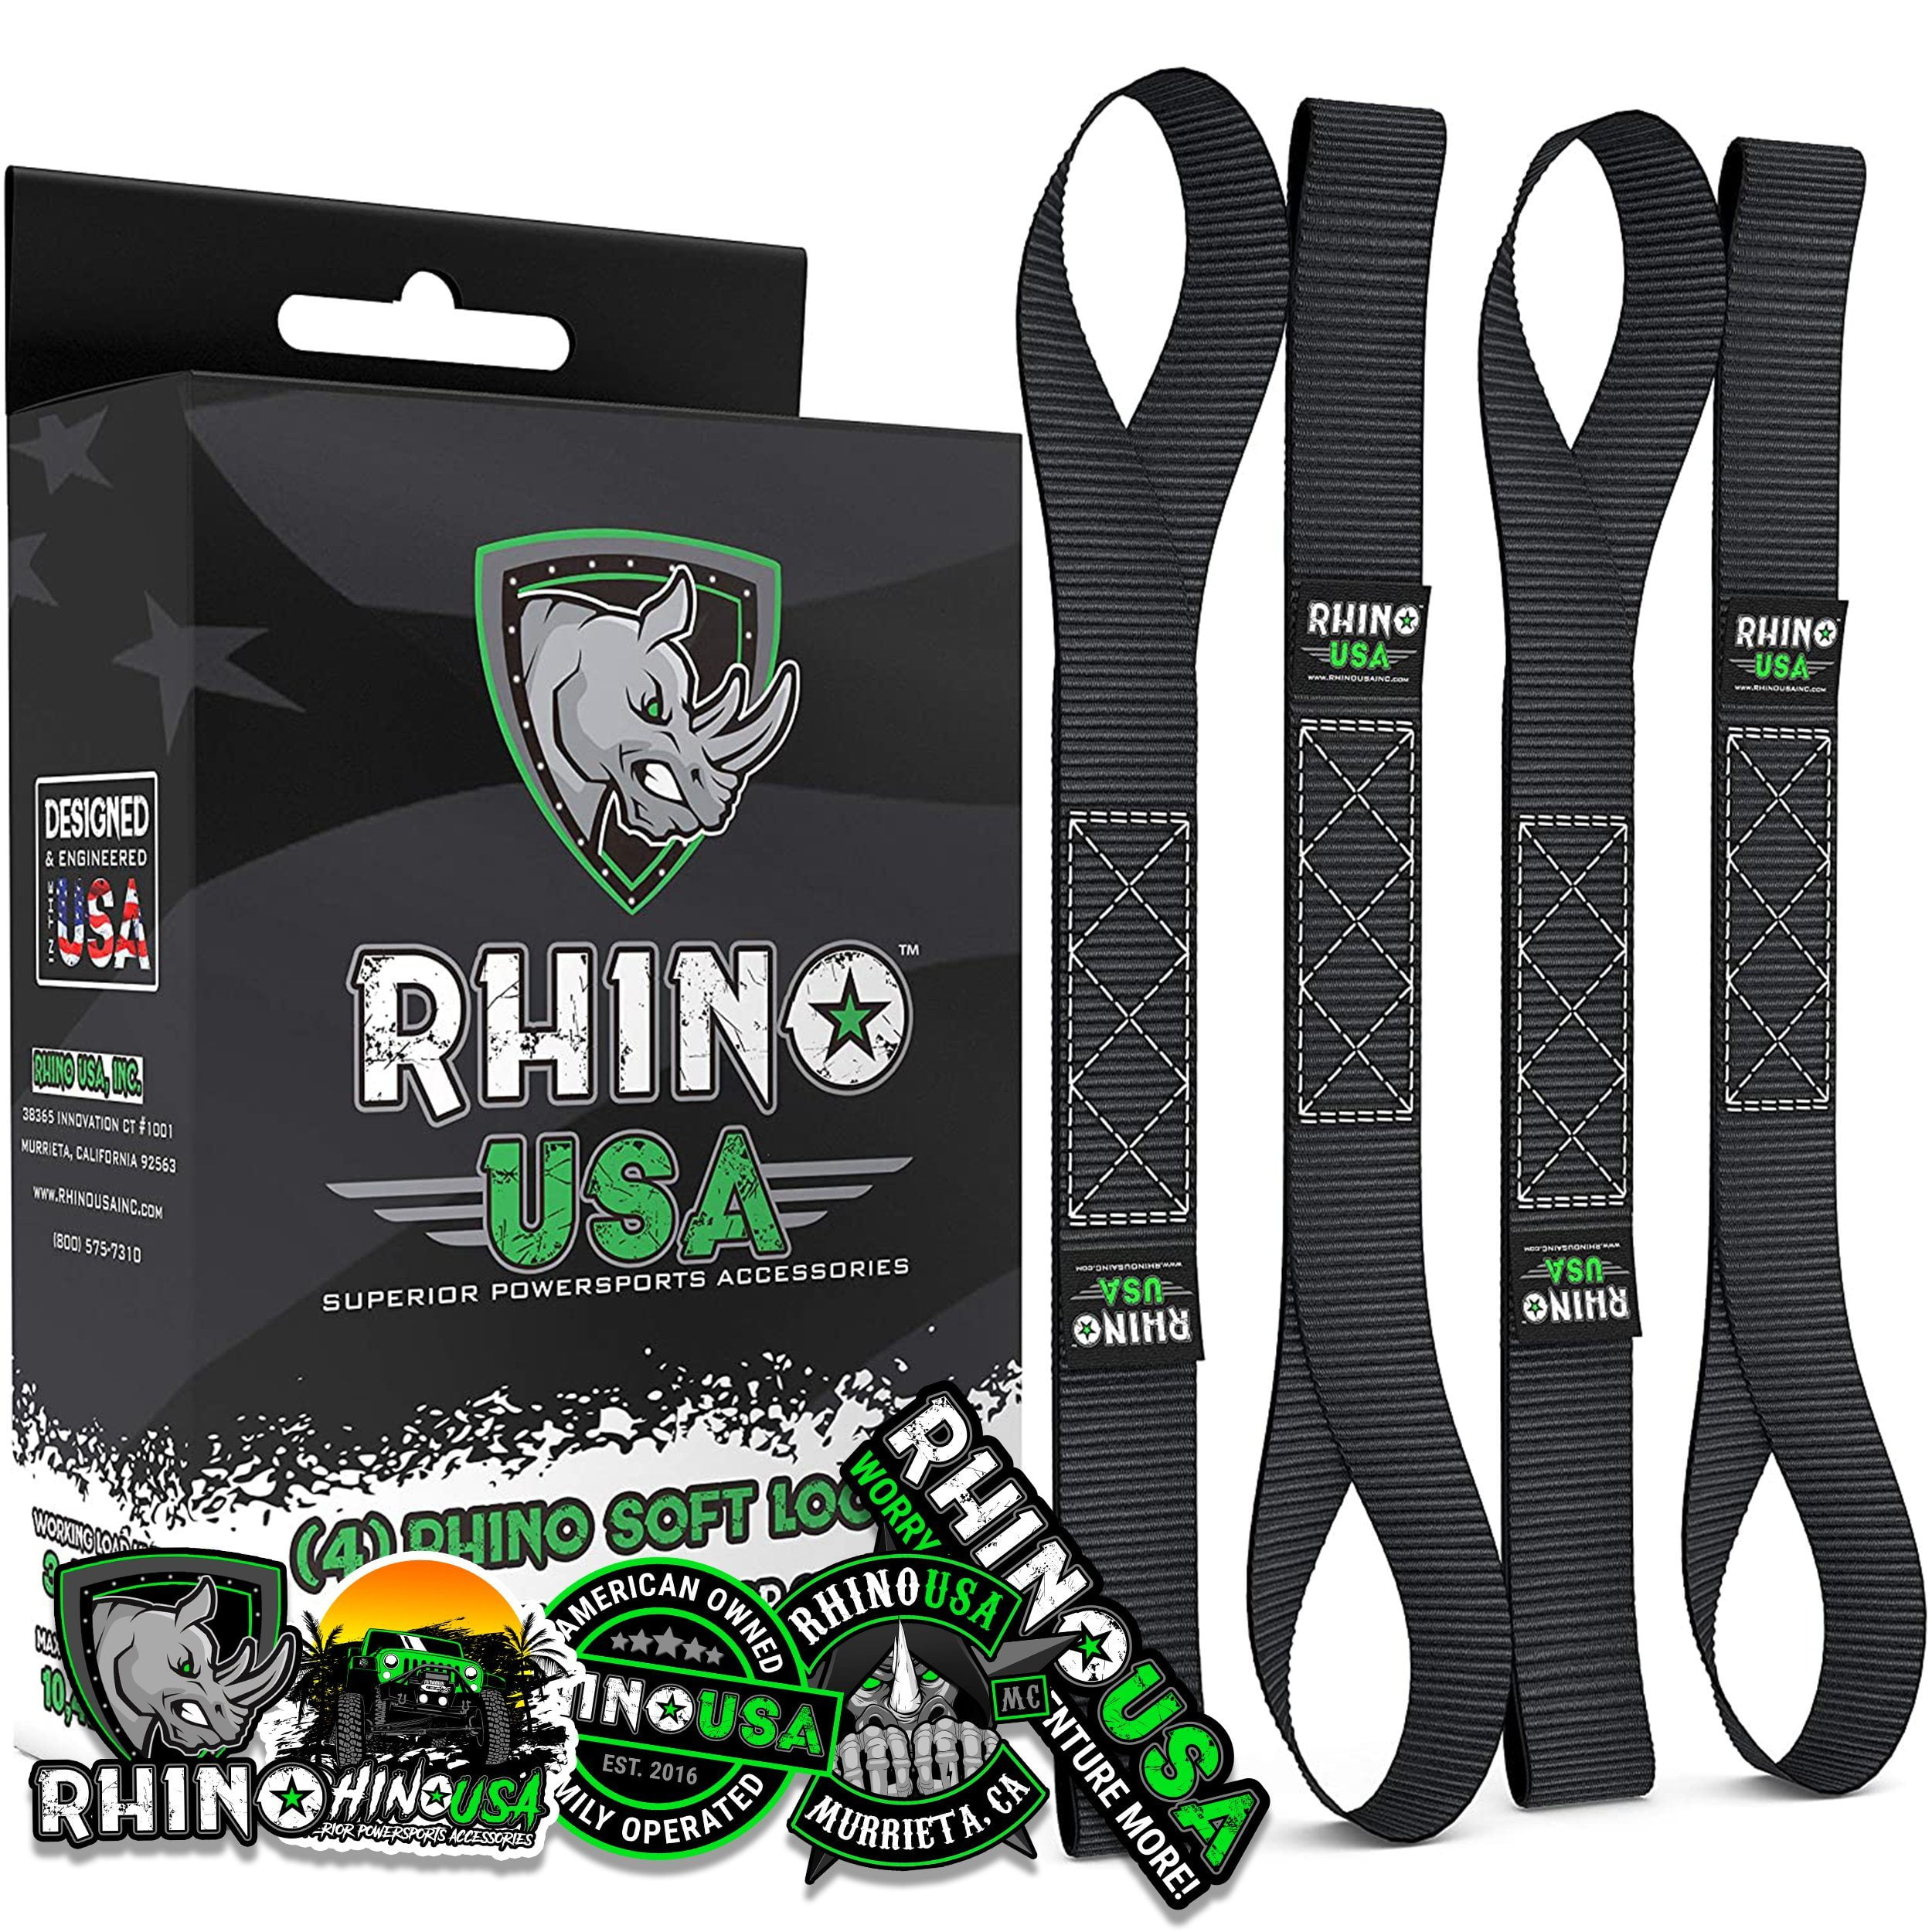 Rhino USA - 1.7 x 17 Soft Loop Tie-Down Straps (4-Pack) - 10,427